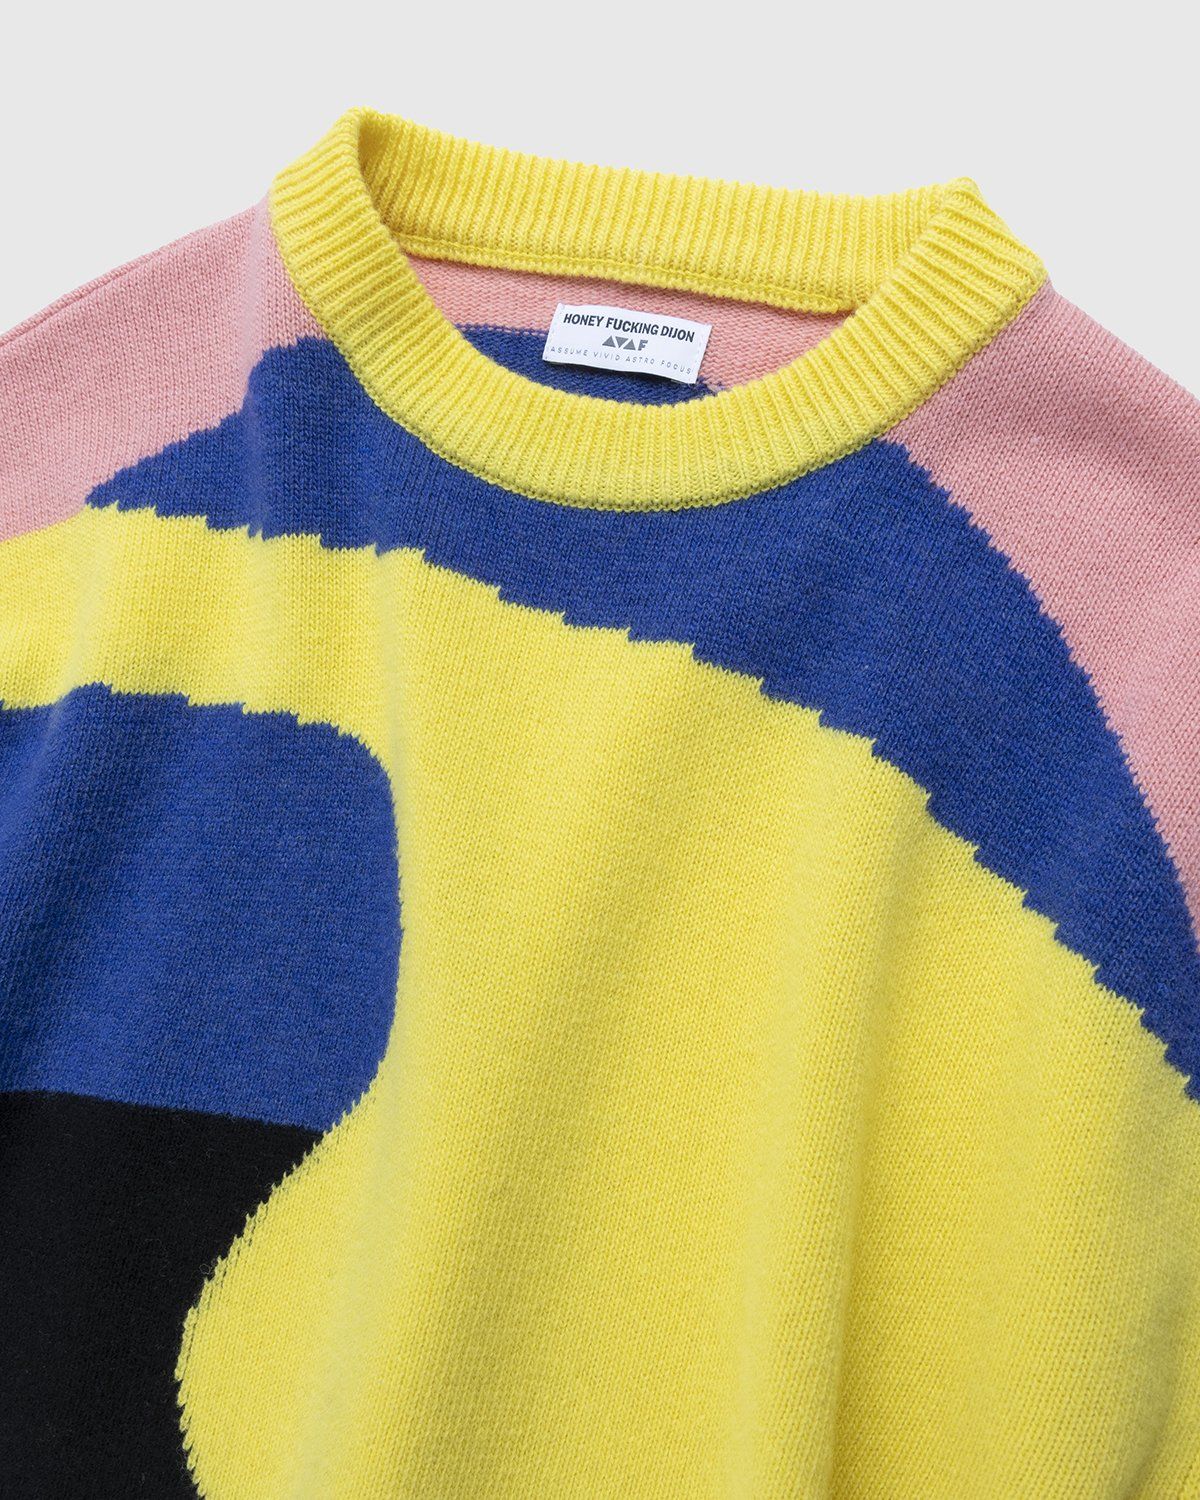 Honey Fucking Dijon x Eli Avaf – Crewneck Knitted Sweater - Knitwear - Multi - Image 5